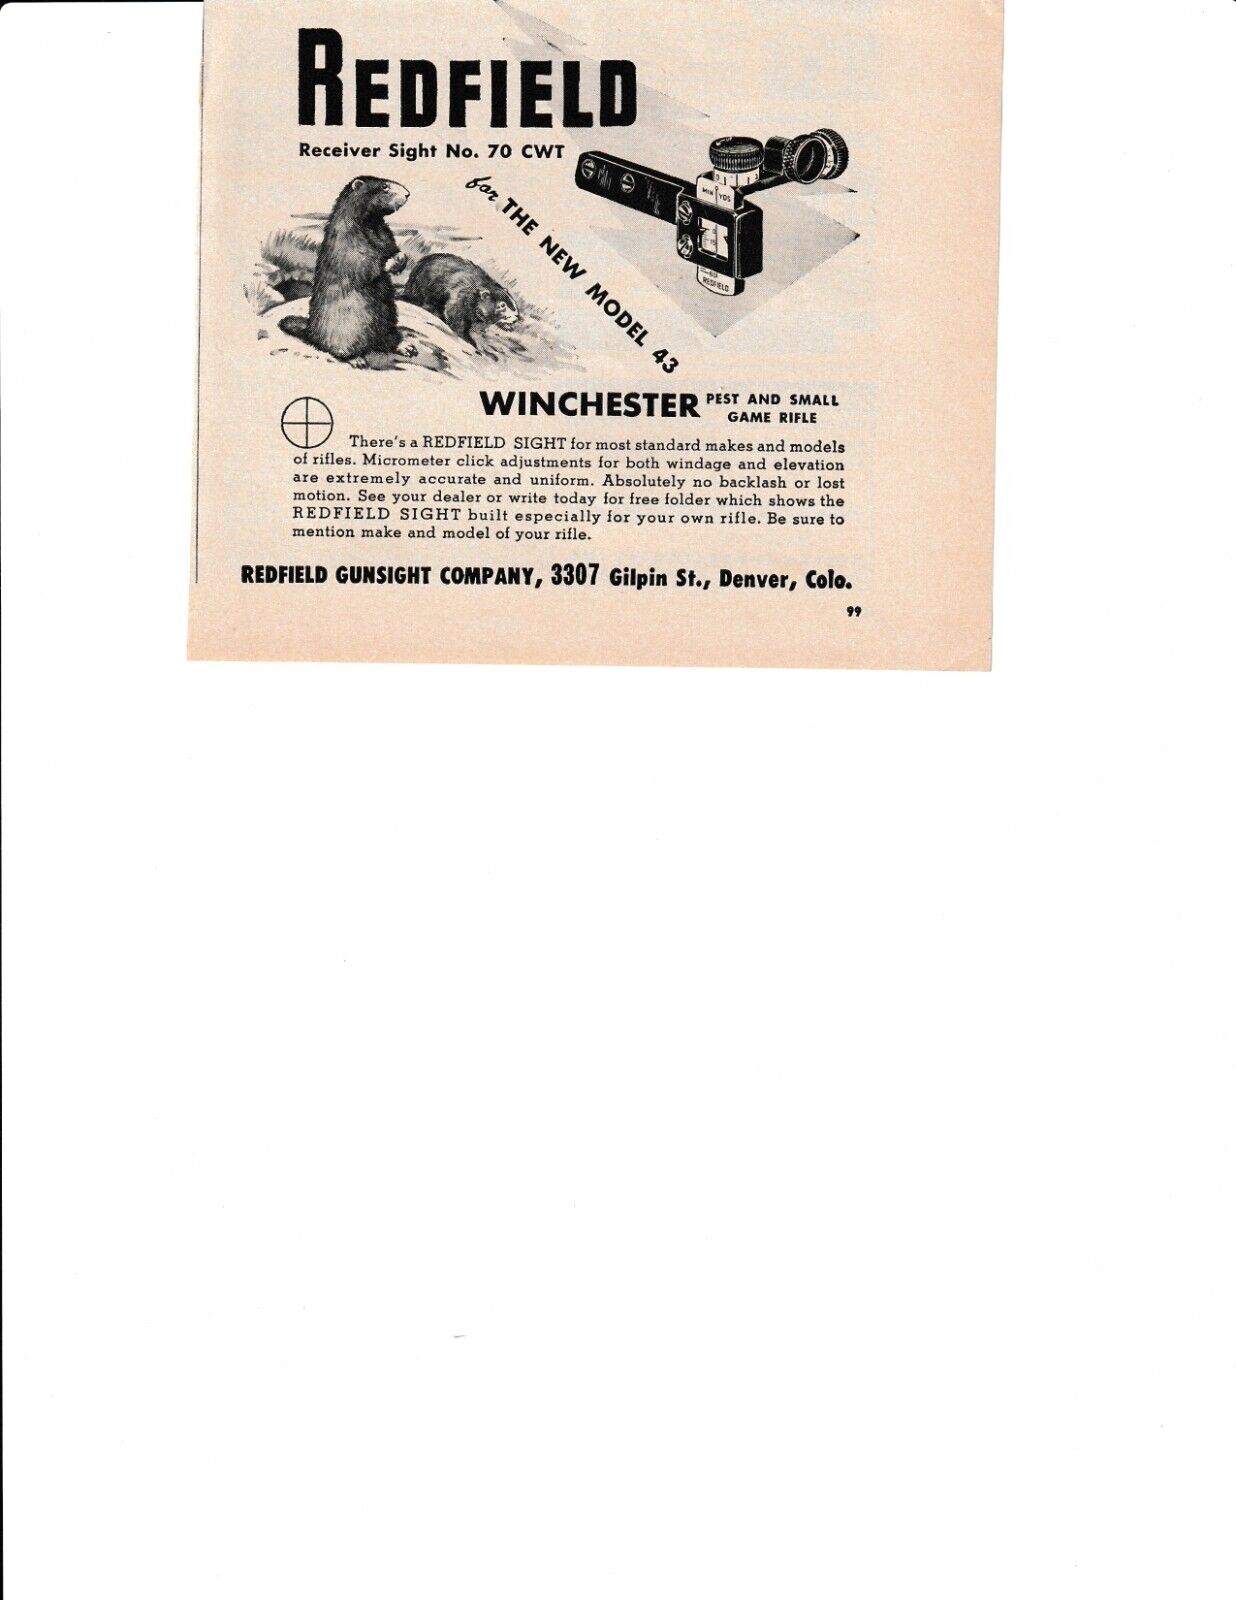 Redfield Gunsight Co Print Ad 1949 70 CWT Rifle Gunsight Denver CO 